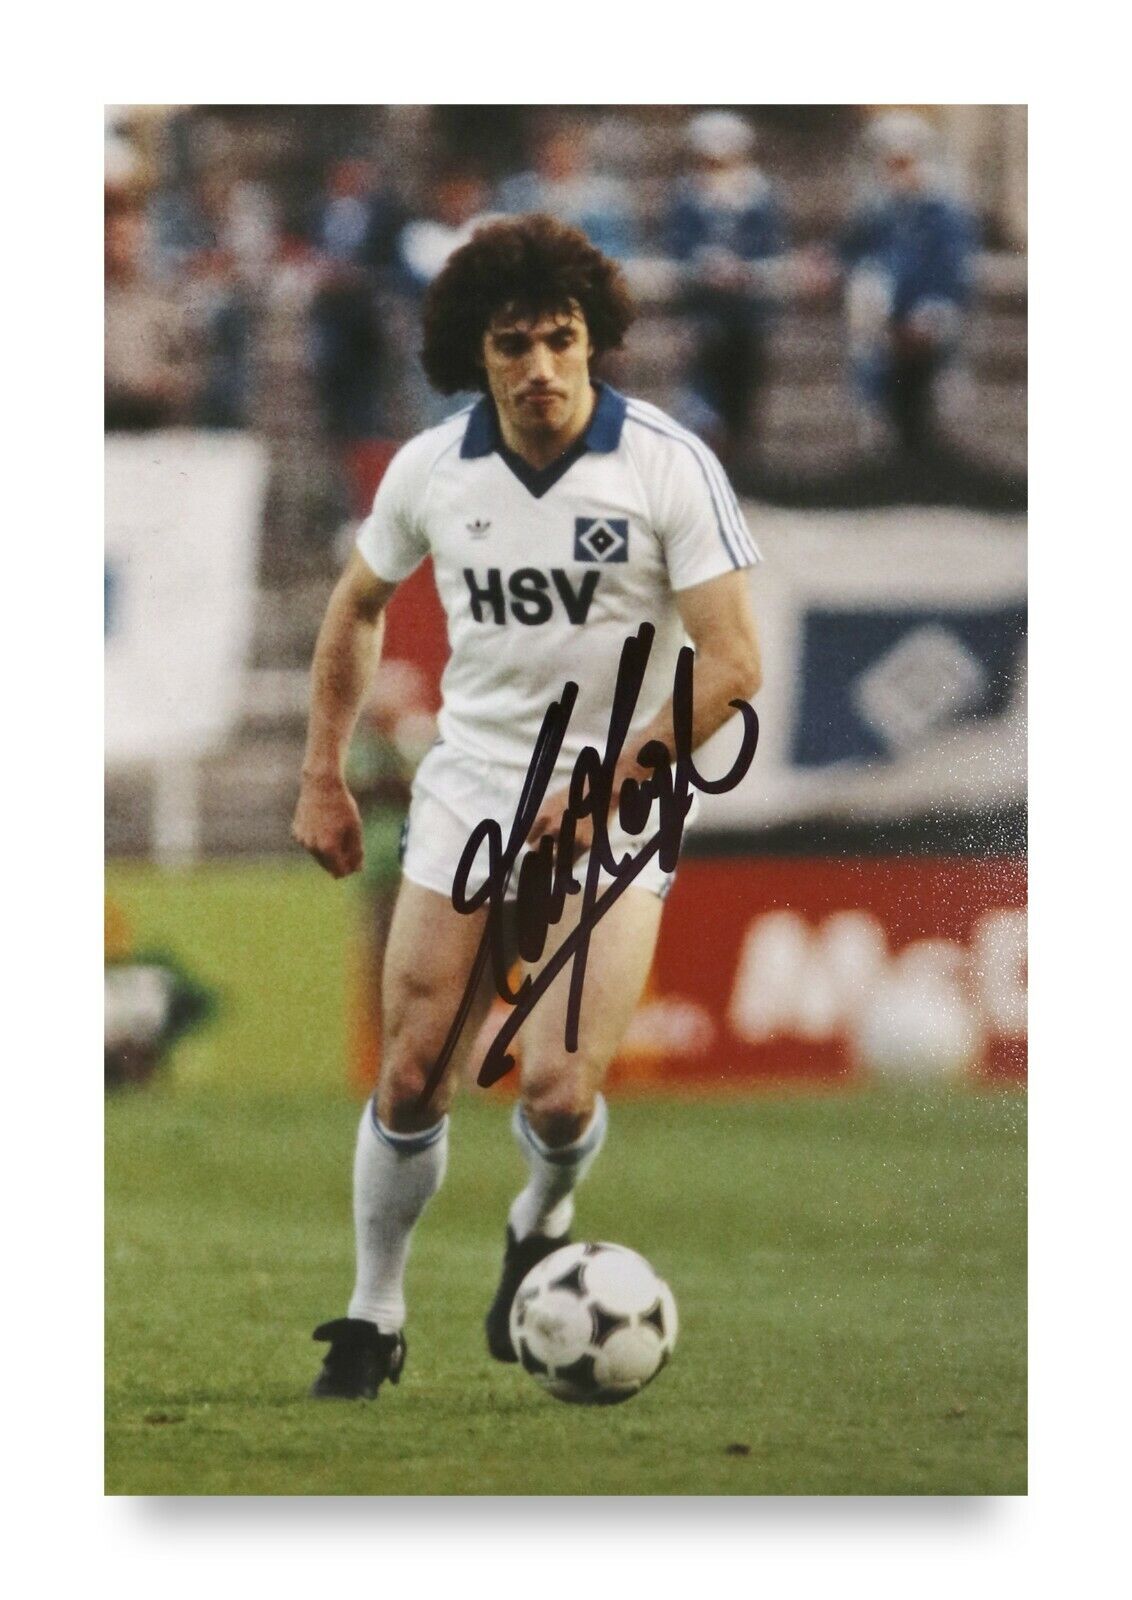 Kevin Keegan Hand Signed 6x4 Photo Poster painting Newcastle United Hamburg SV Autograph + COA